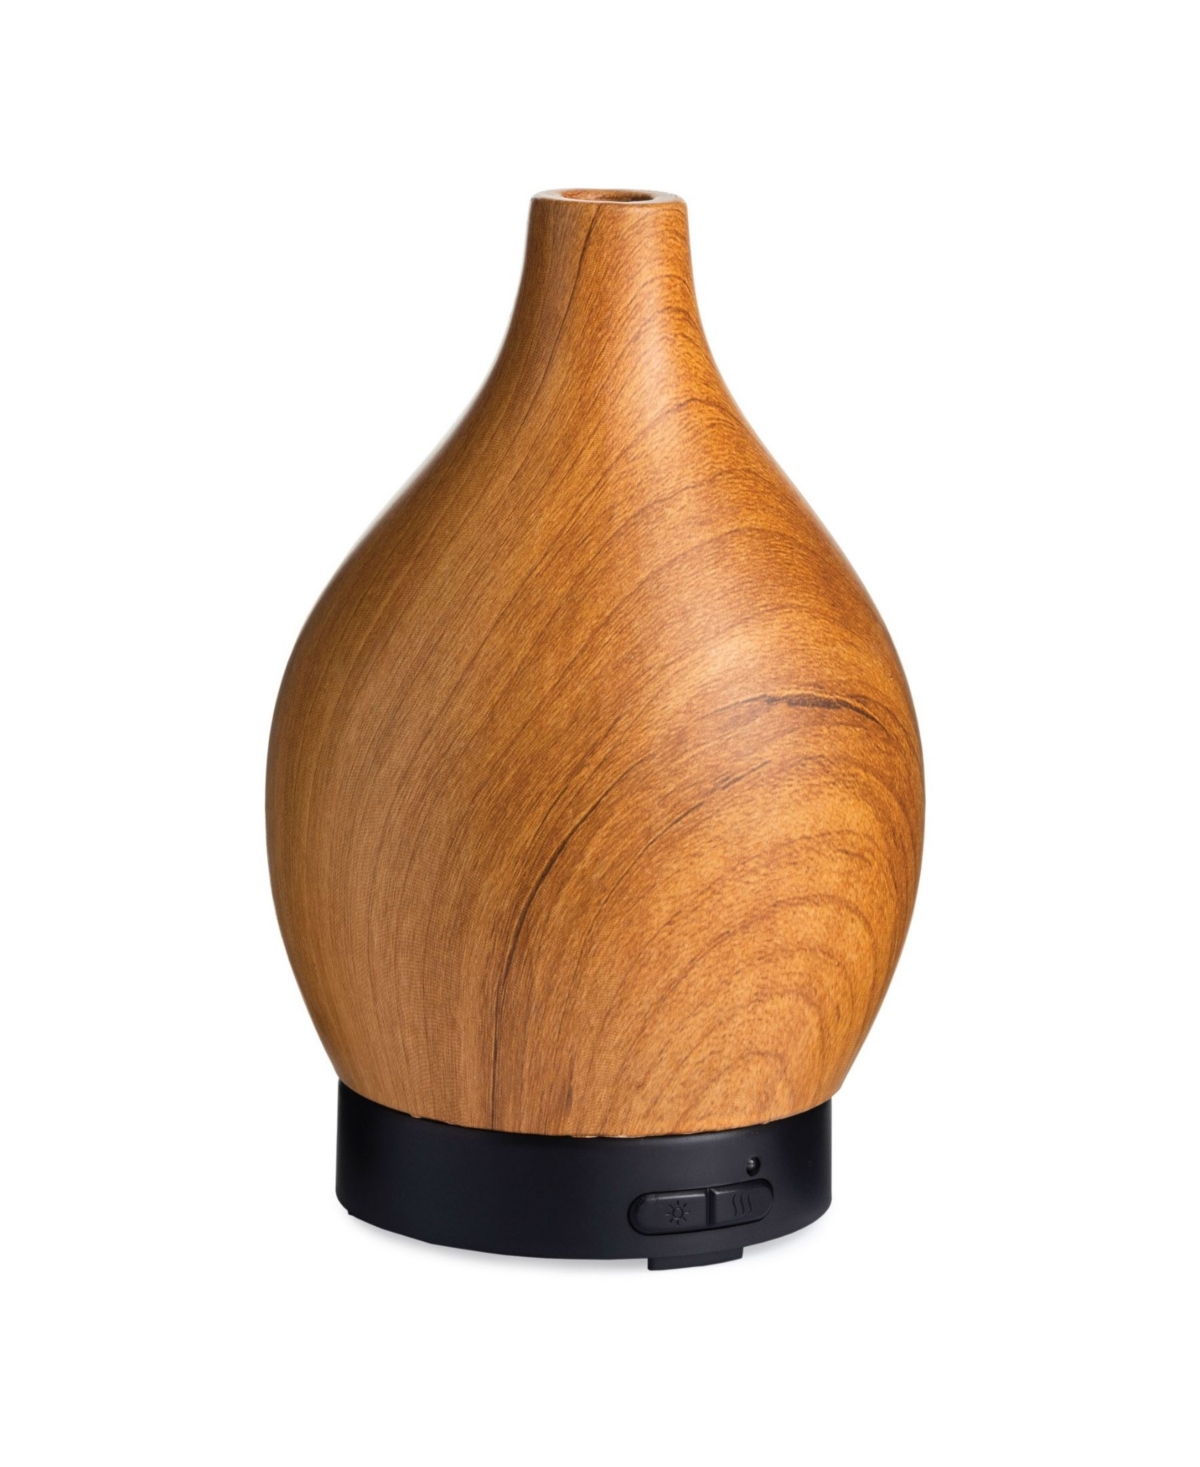 Woodgrain Vase Ultrasonic Essential Oil Diffuser, Set of 4 - Brown